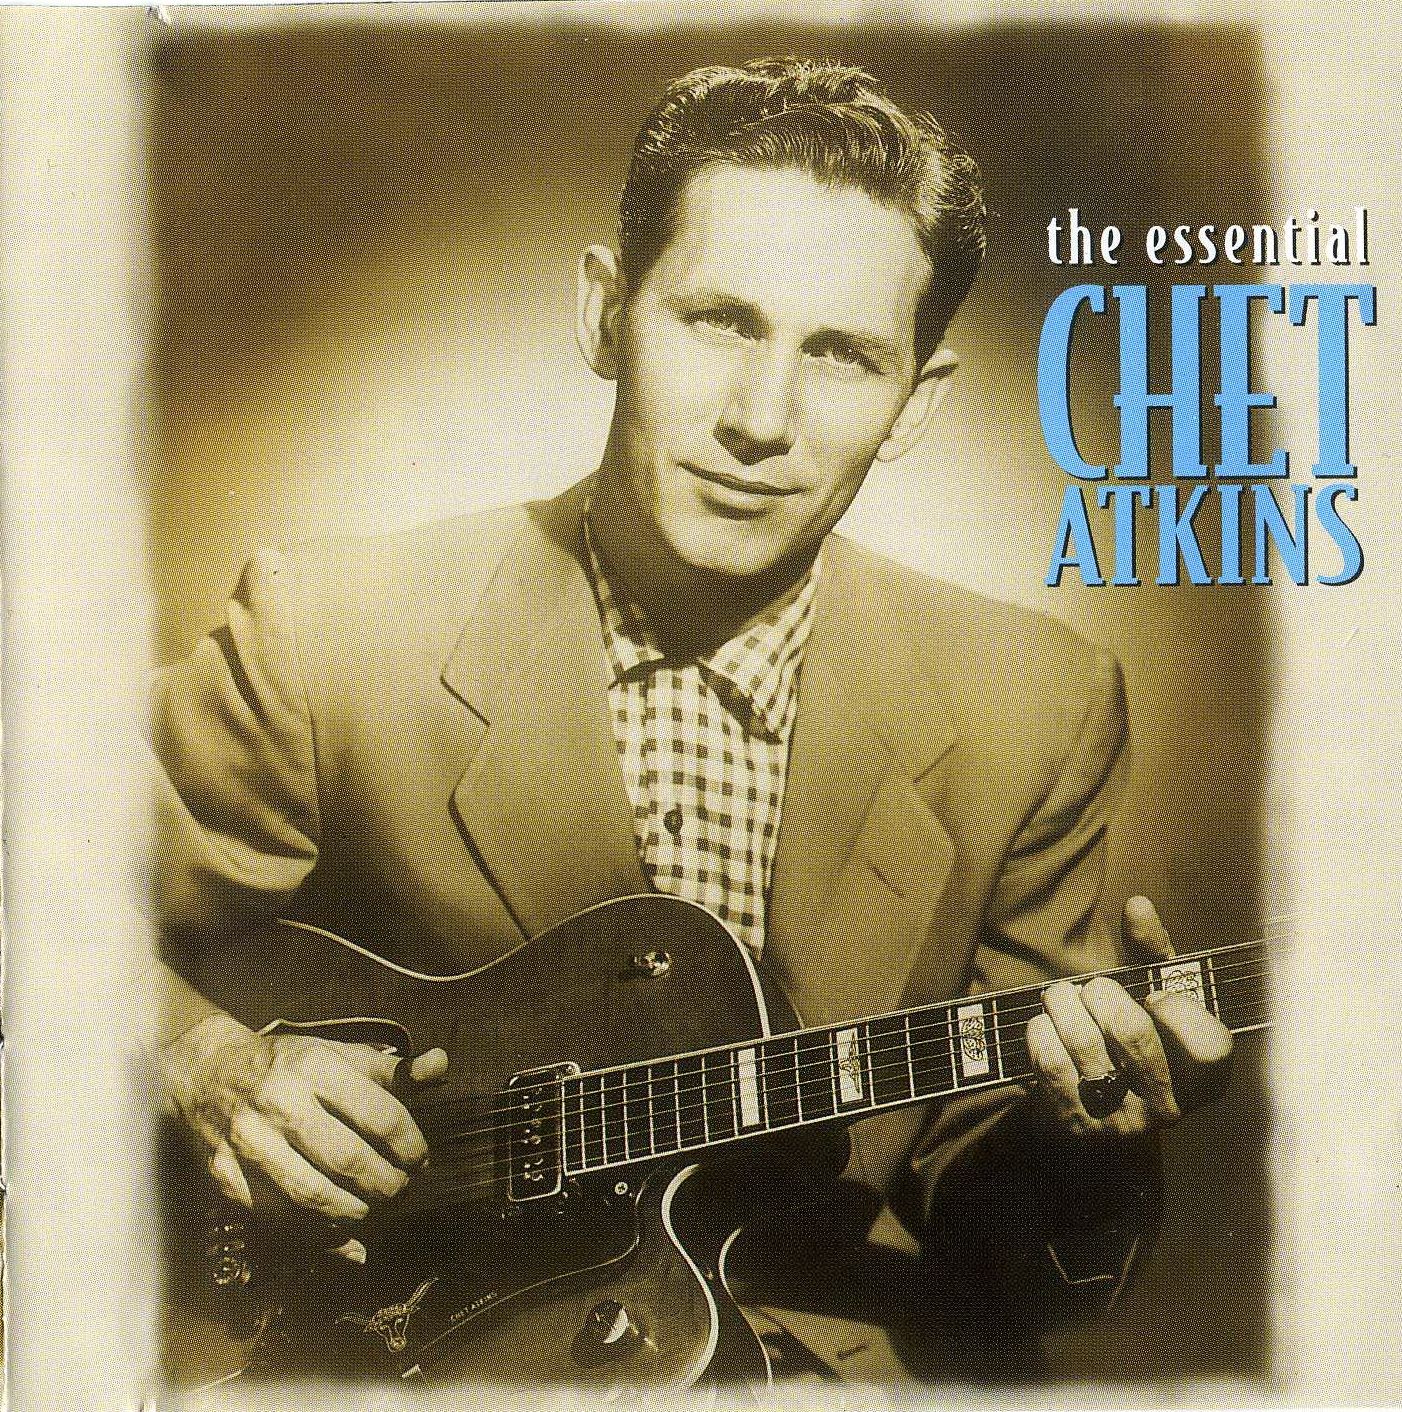 The Essential Chet Atkins Bluegrass Chet Atkins Download Bluegrass Music Download The